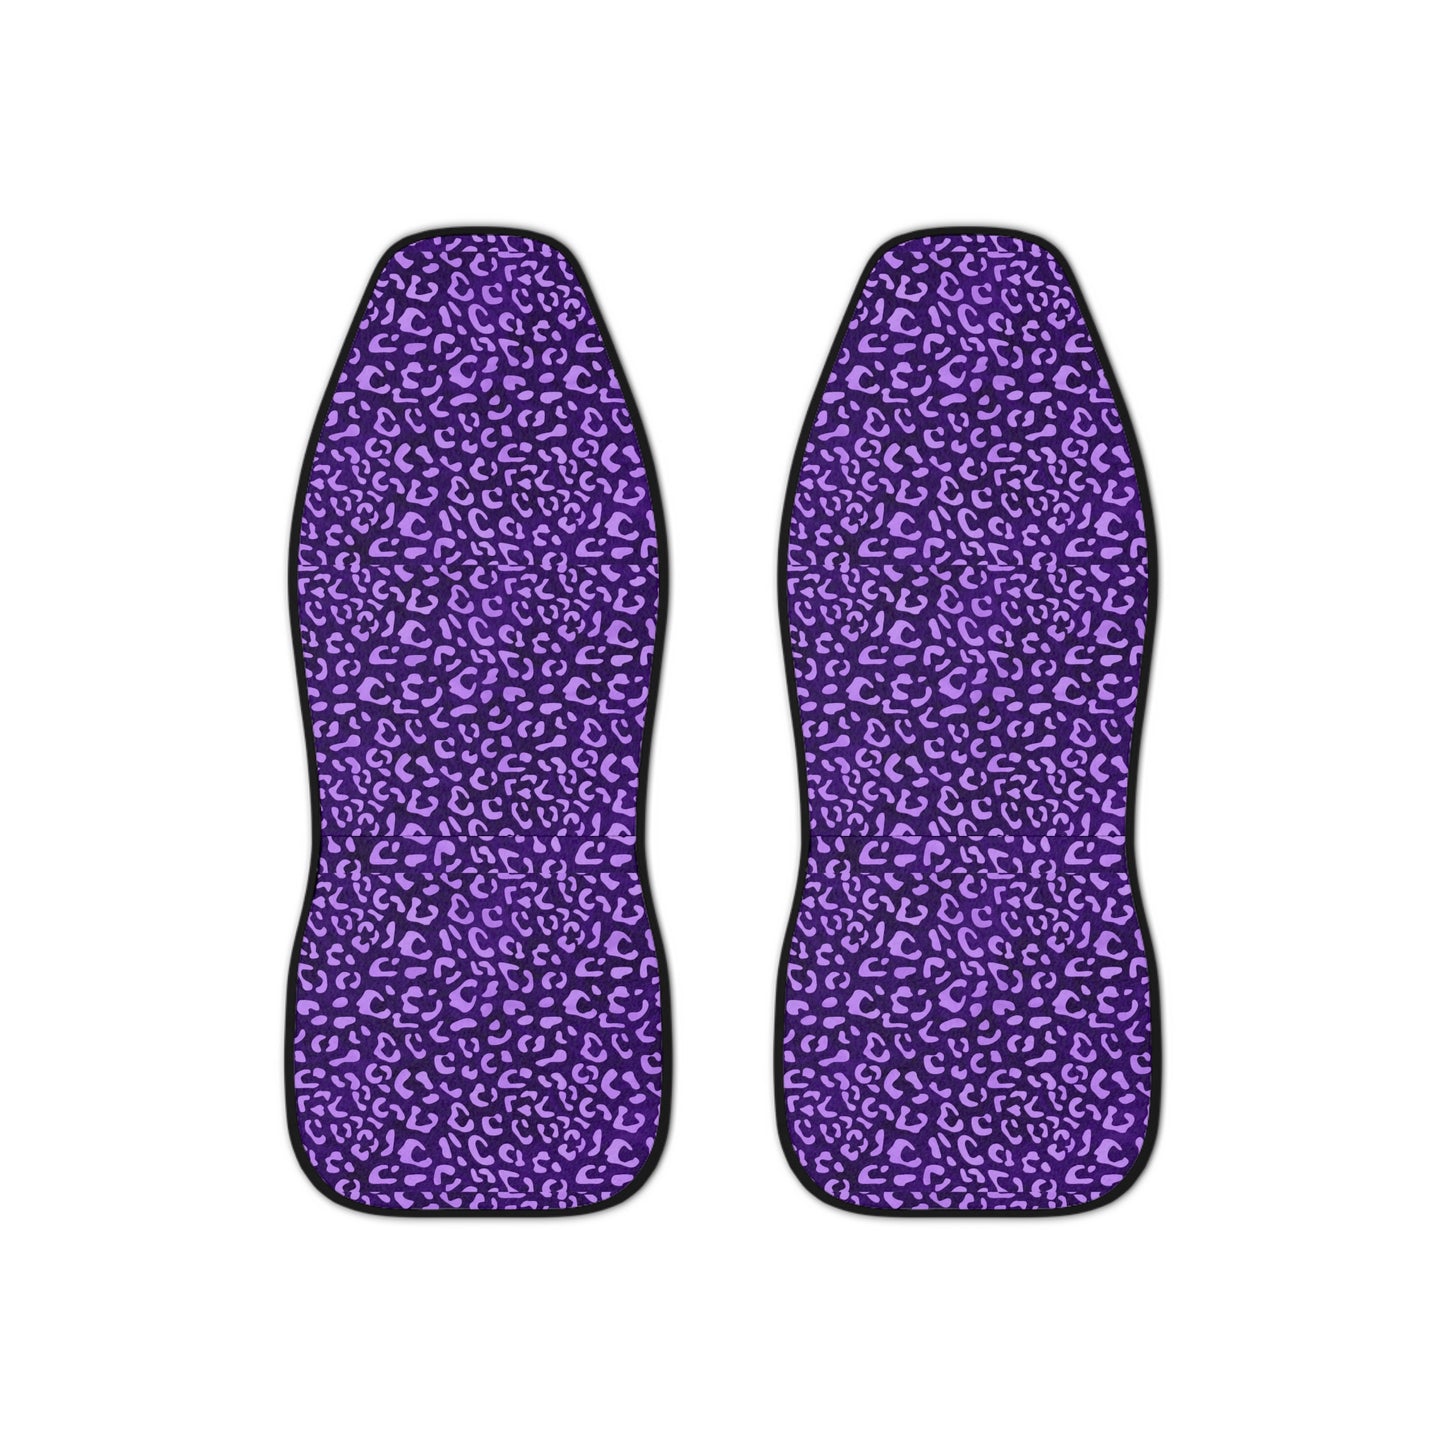 Purple Leopard Print Car Seat Covers